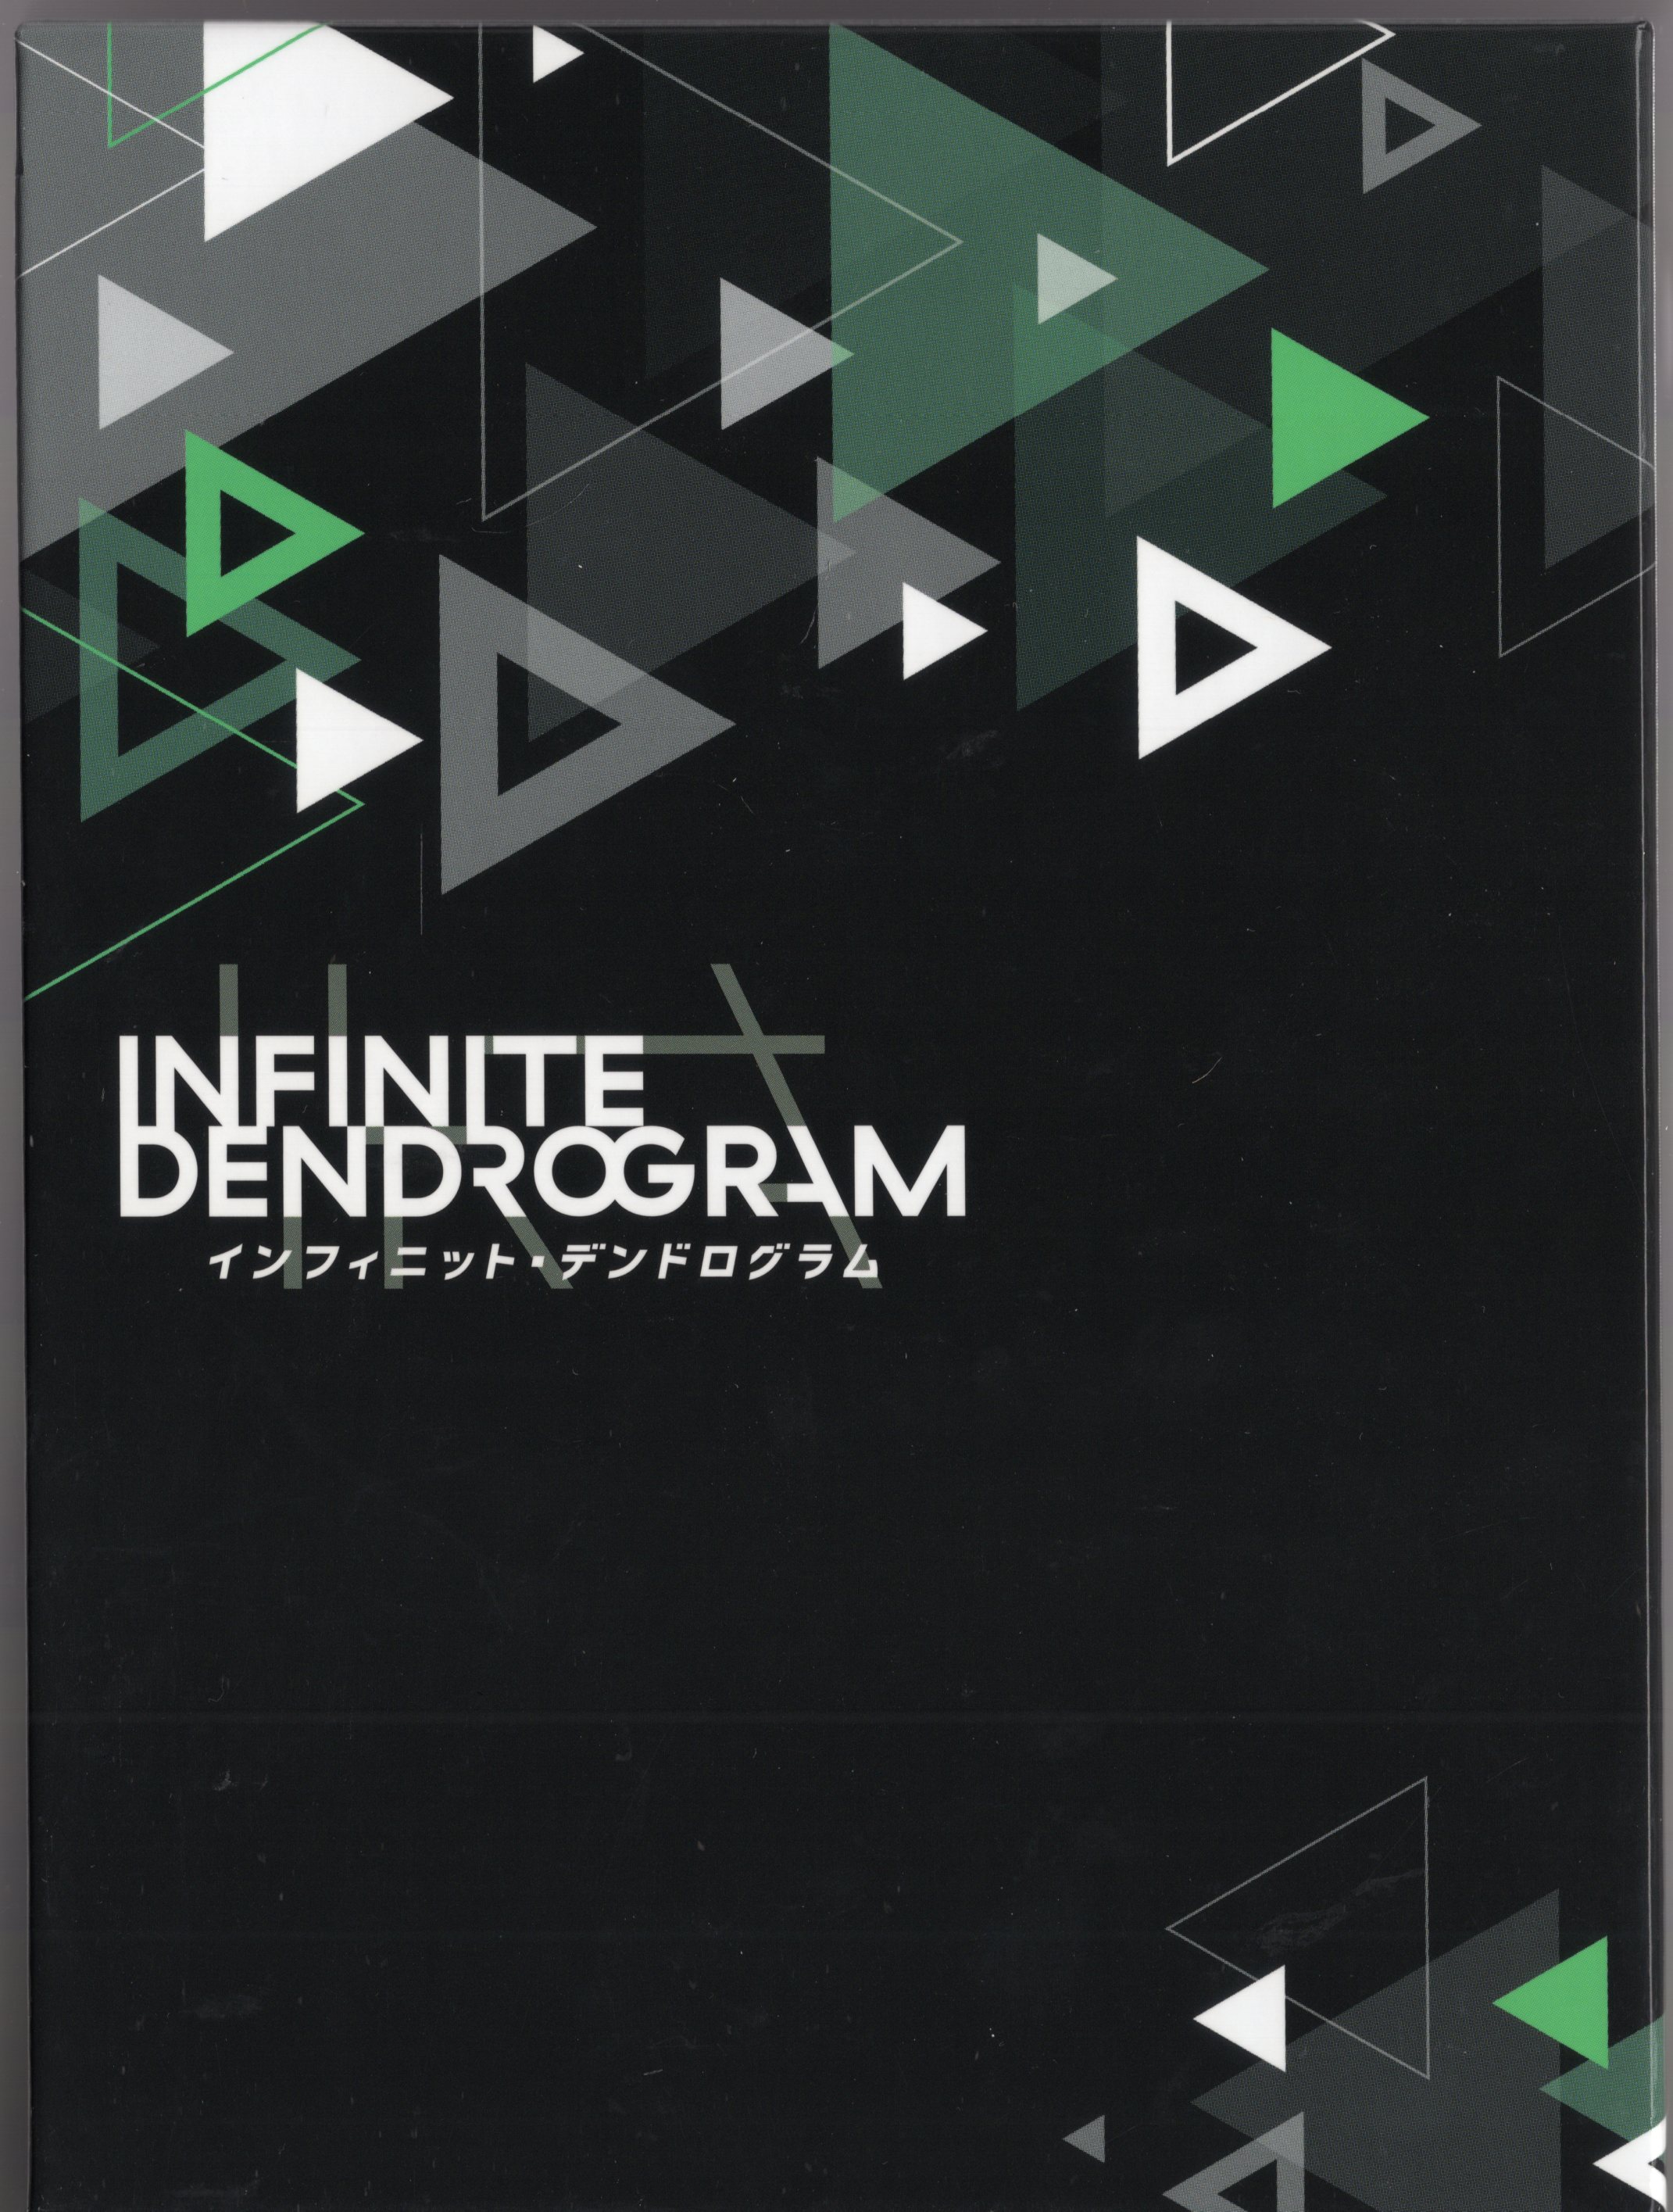 Anime Blu-ray Disc Infinite dendrogram 3-volume set, Video software